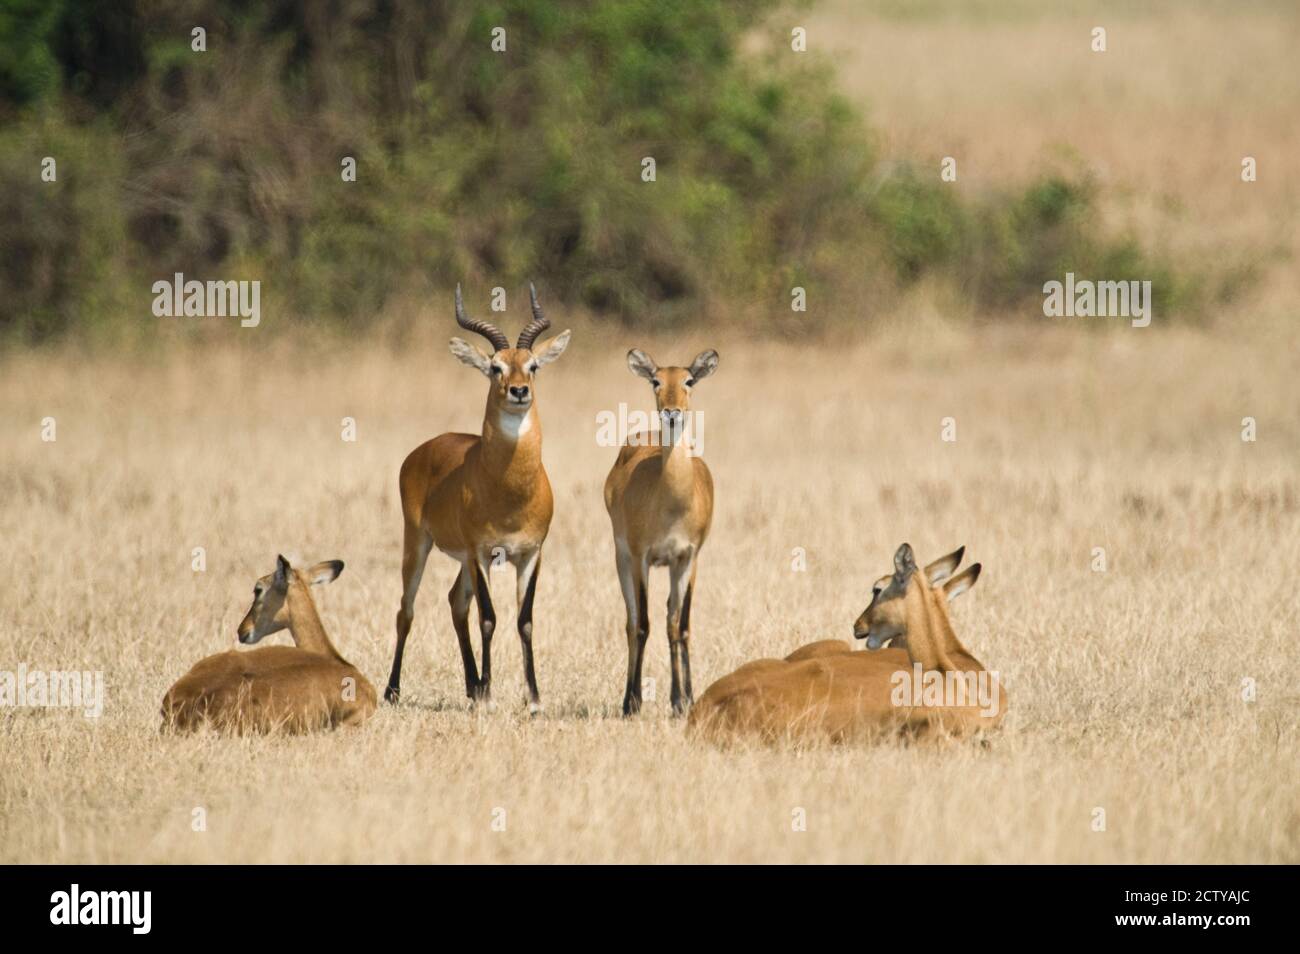 Ugandan kobs (Kobus kob thomasi) mating behavior sequence, Queen Elizabeth National Park, Uganda Stock Photo